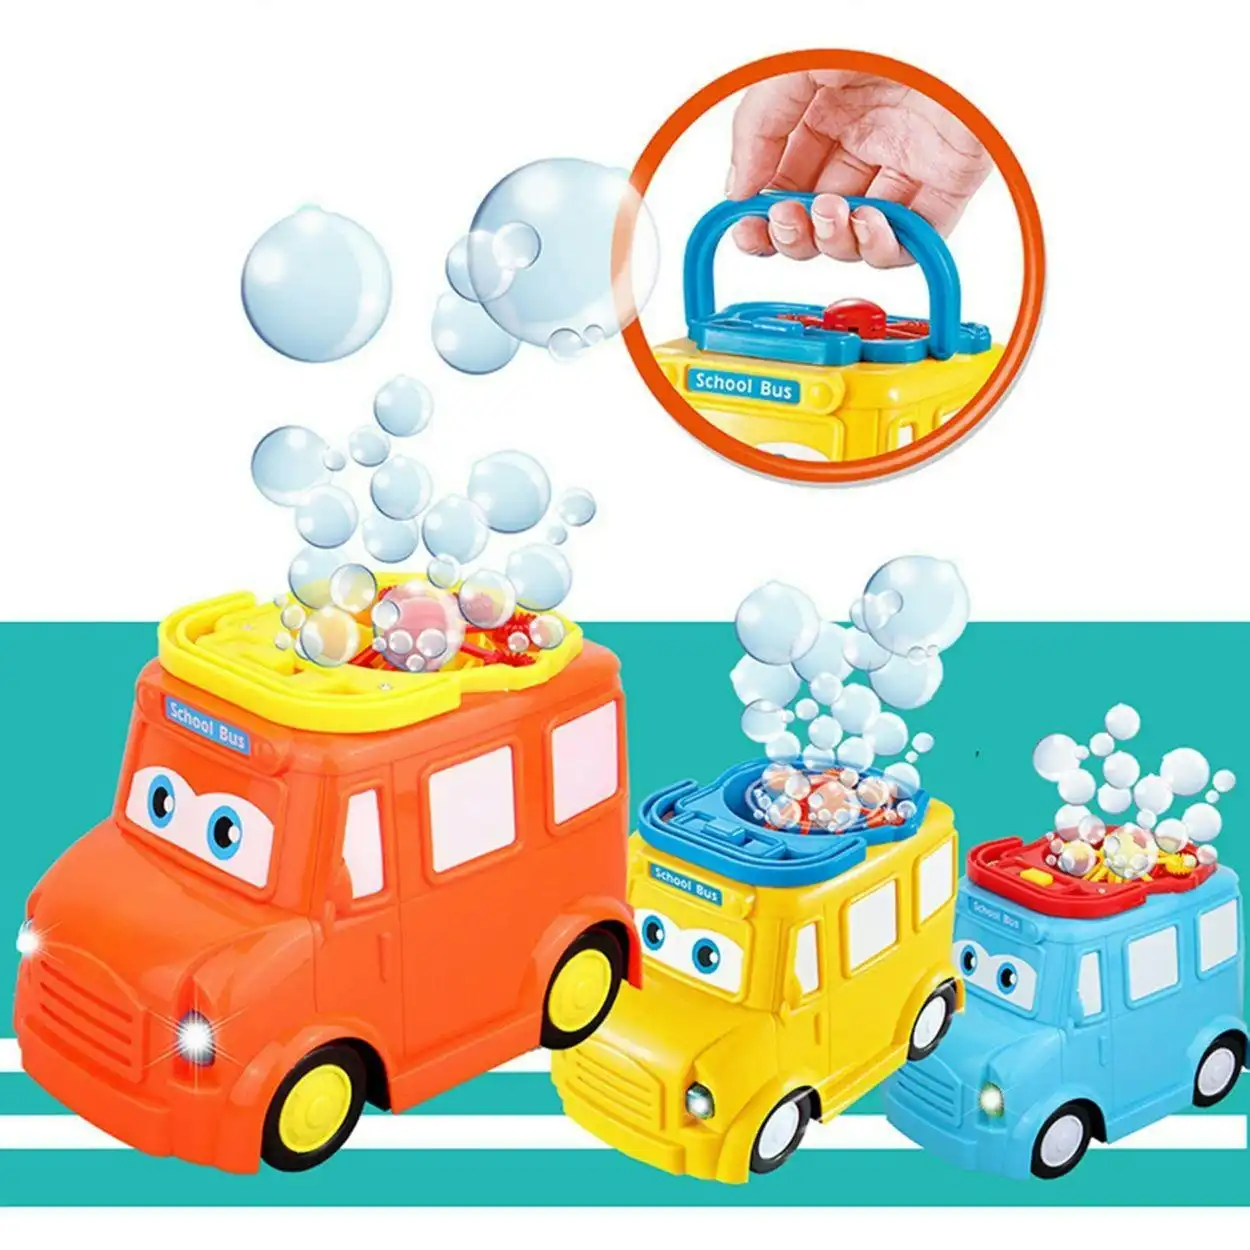 Kidst. Bubble Toy School Bus Toy Bubble Maker & Bubble Blowing Kids Fun Toy